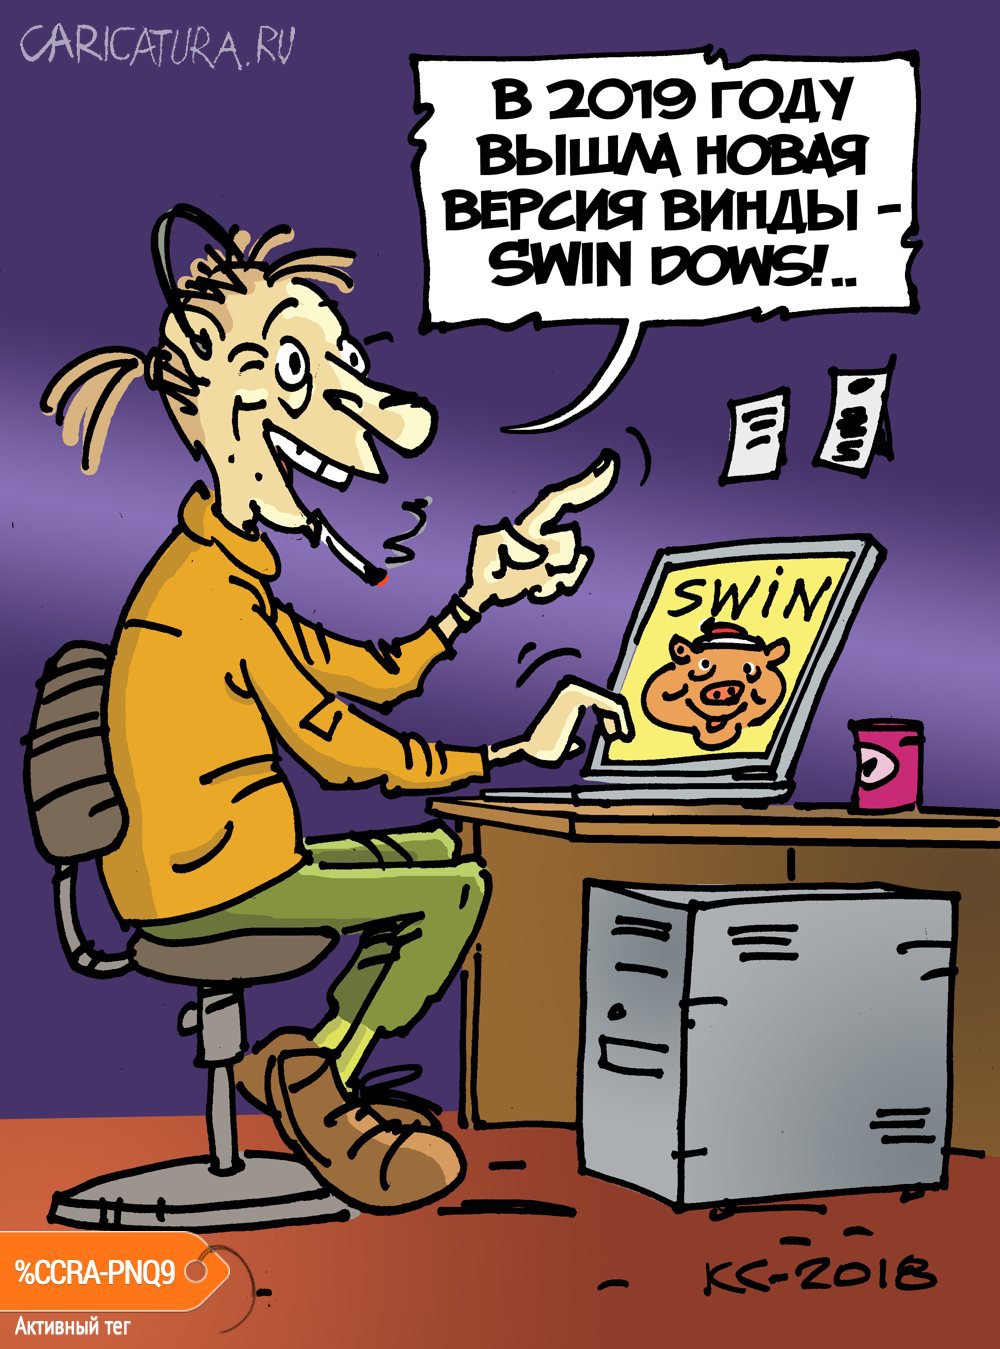 Карикатура "SWINdows", Вячеслав Капрельянц